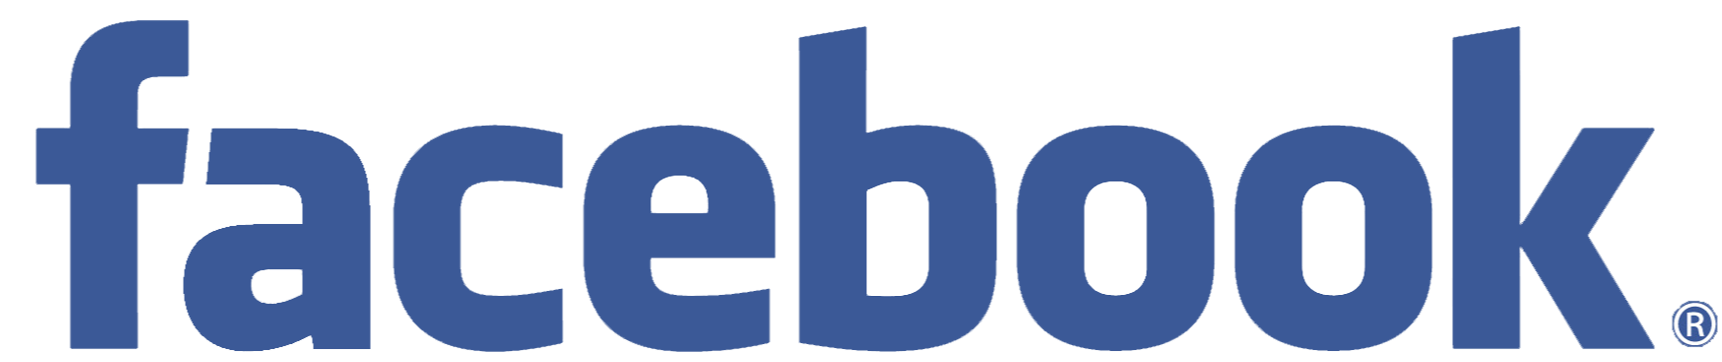 facebook logo white background